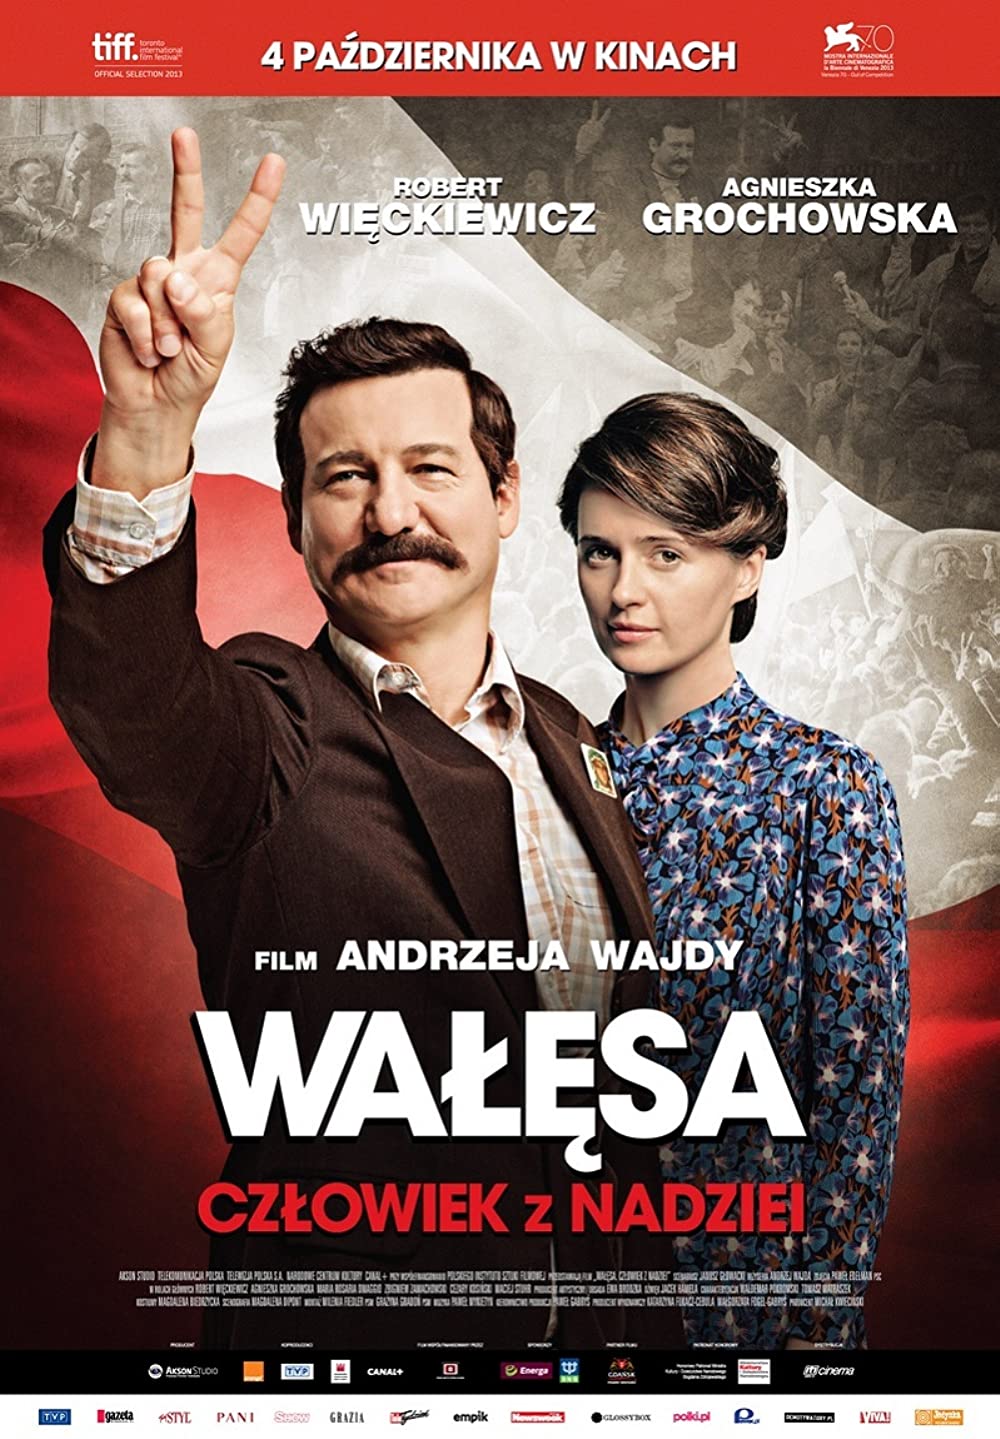 Walesa - Man of Hope